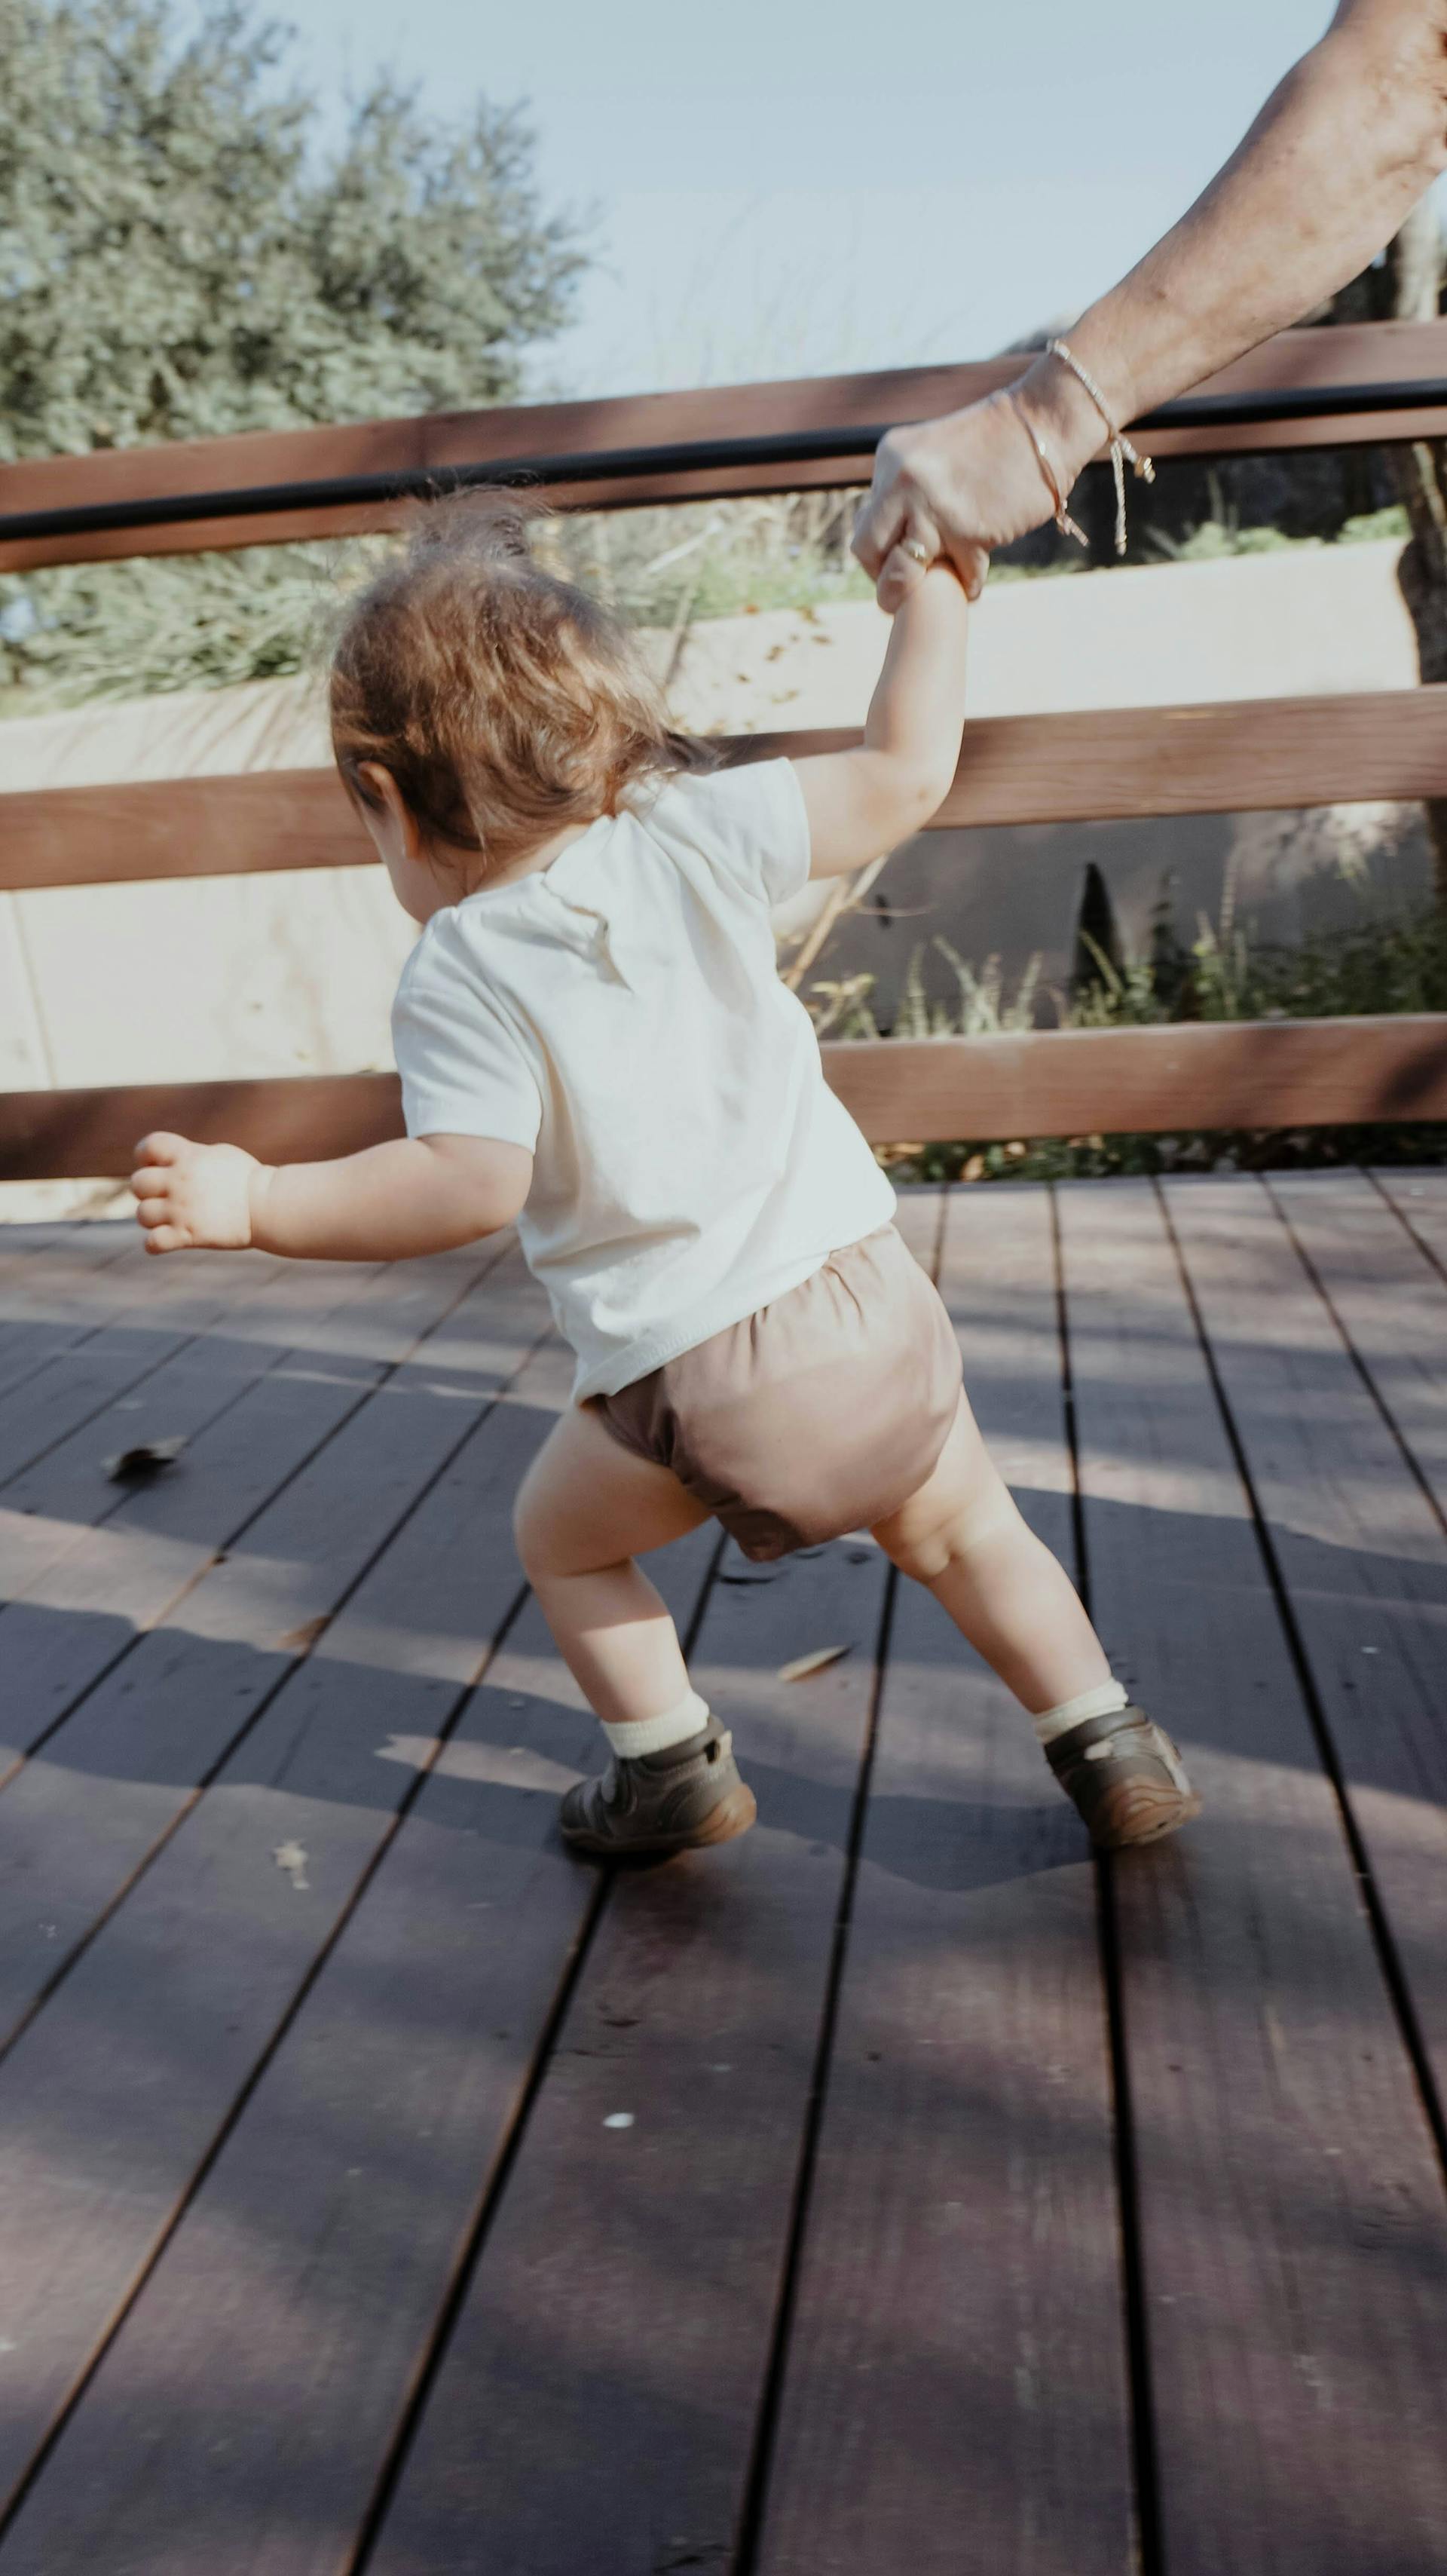 Un bébé qui marche | Source : Pexels